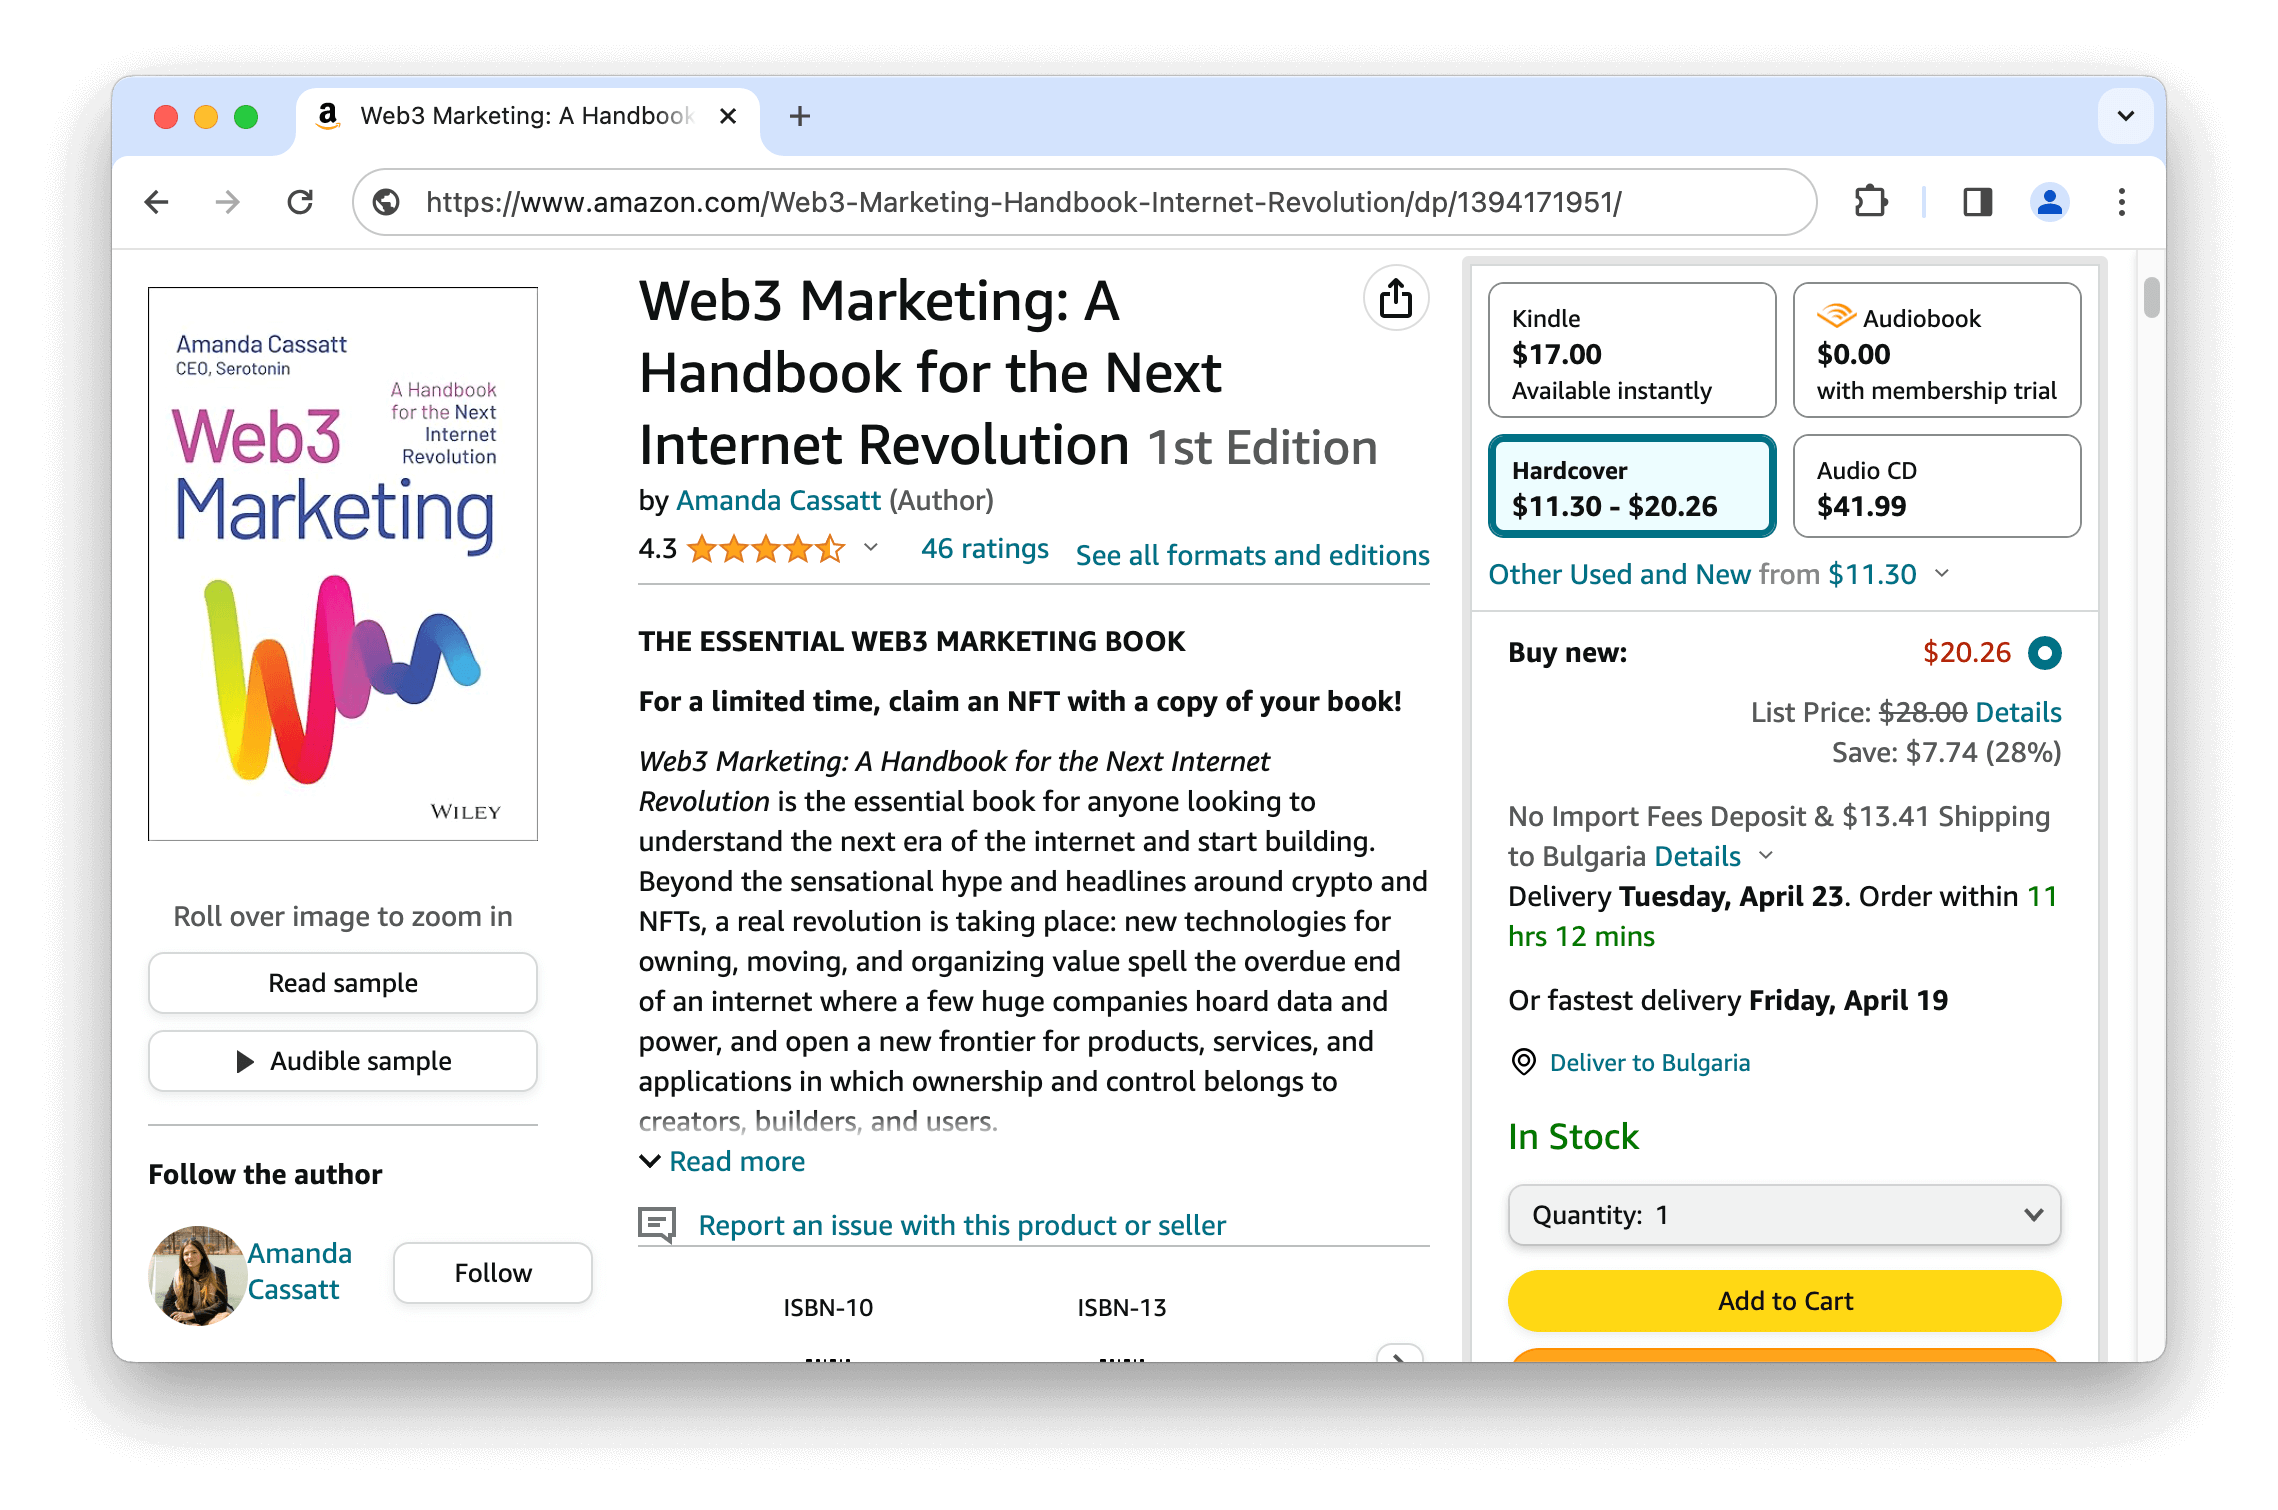 Web3 Marketing book by Amanda Cassatt